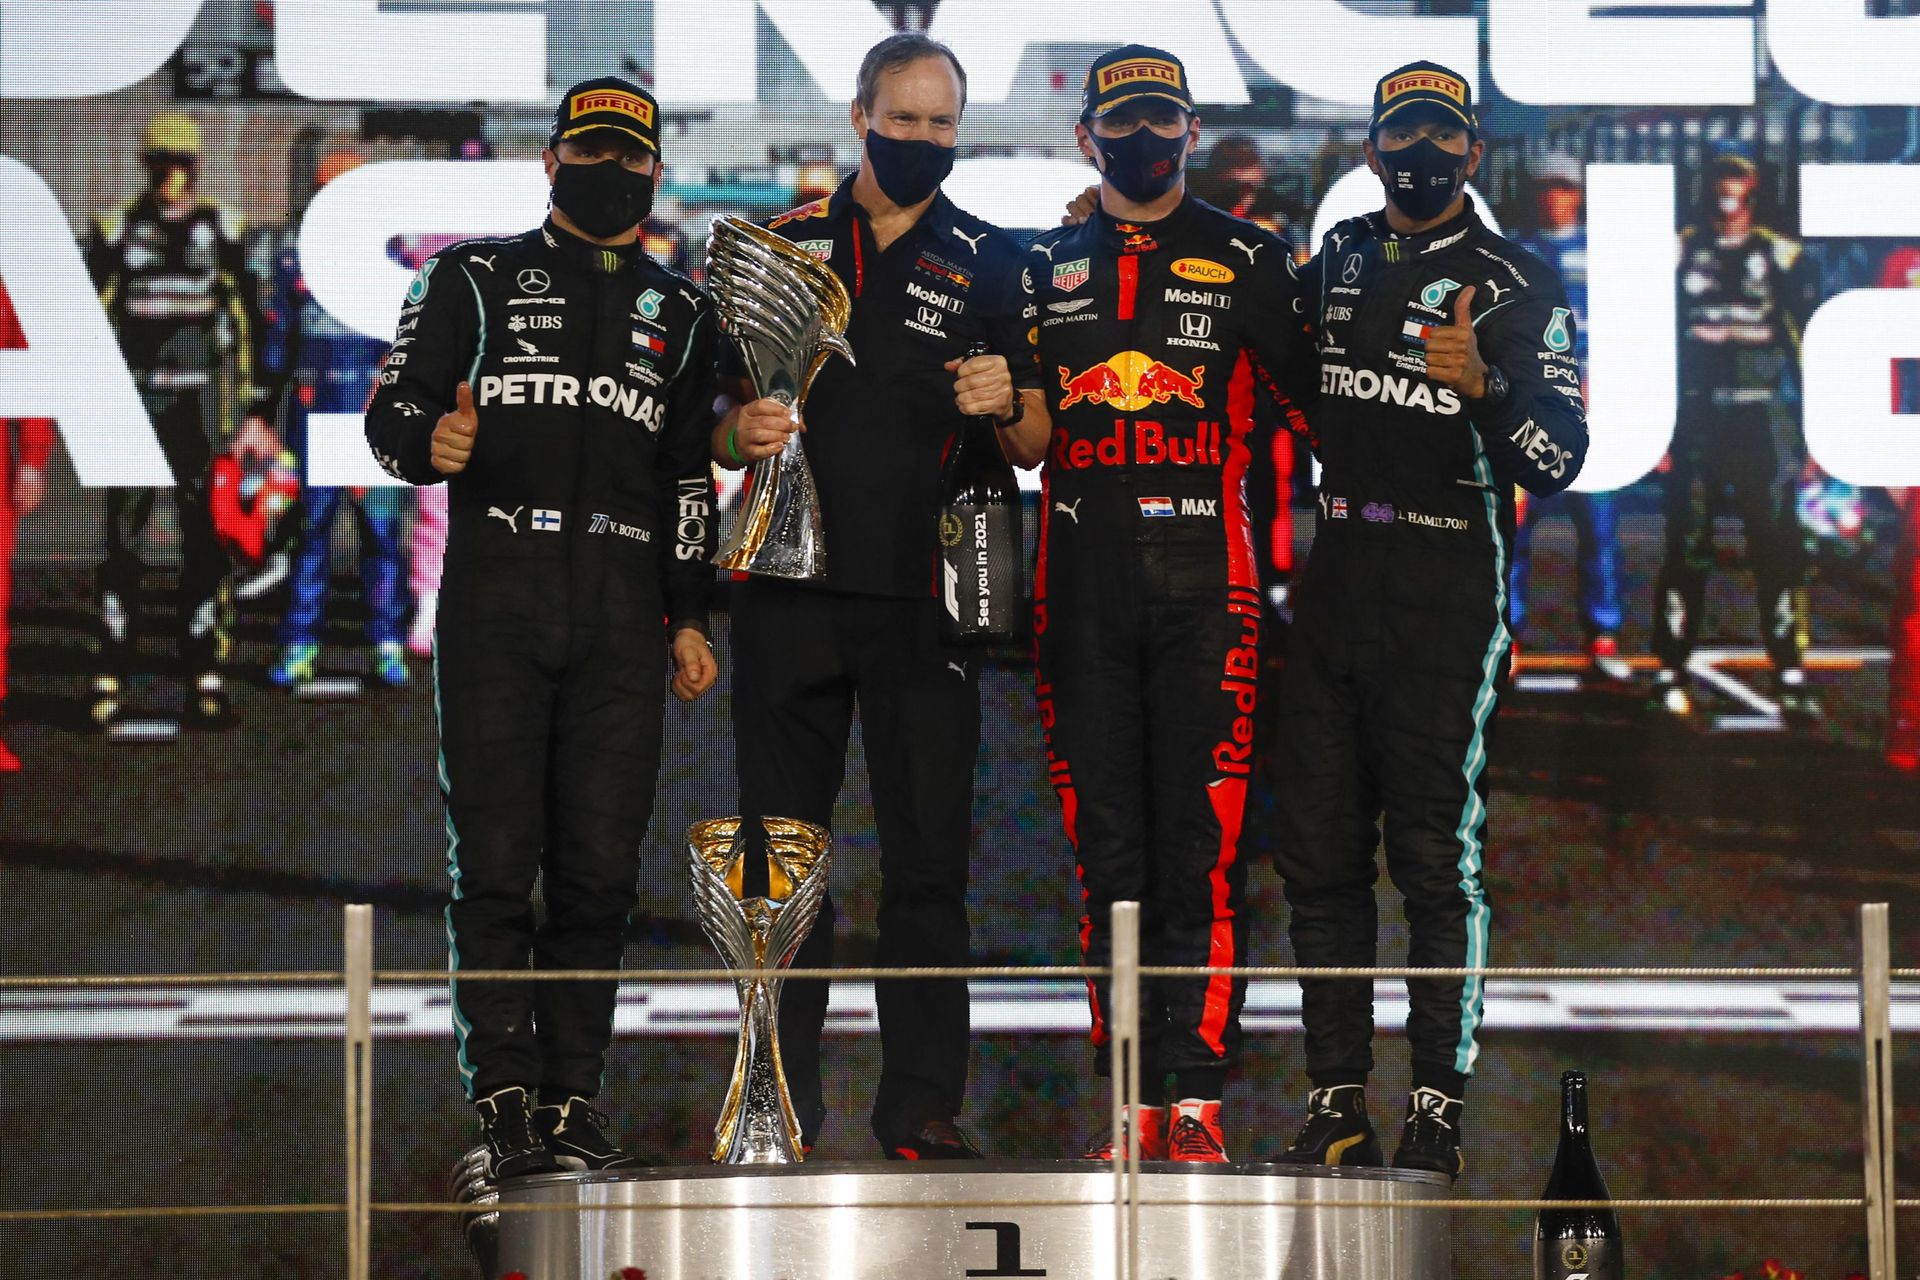 Le podium du Grand Prix d'Abu Dhabi 2020